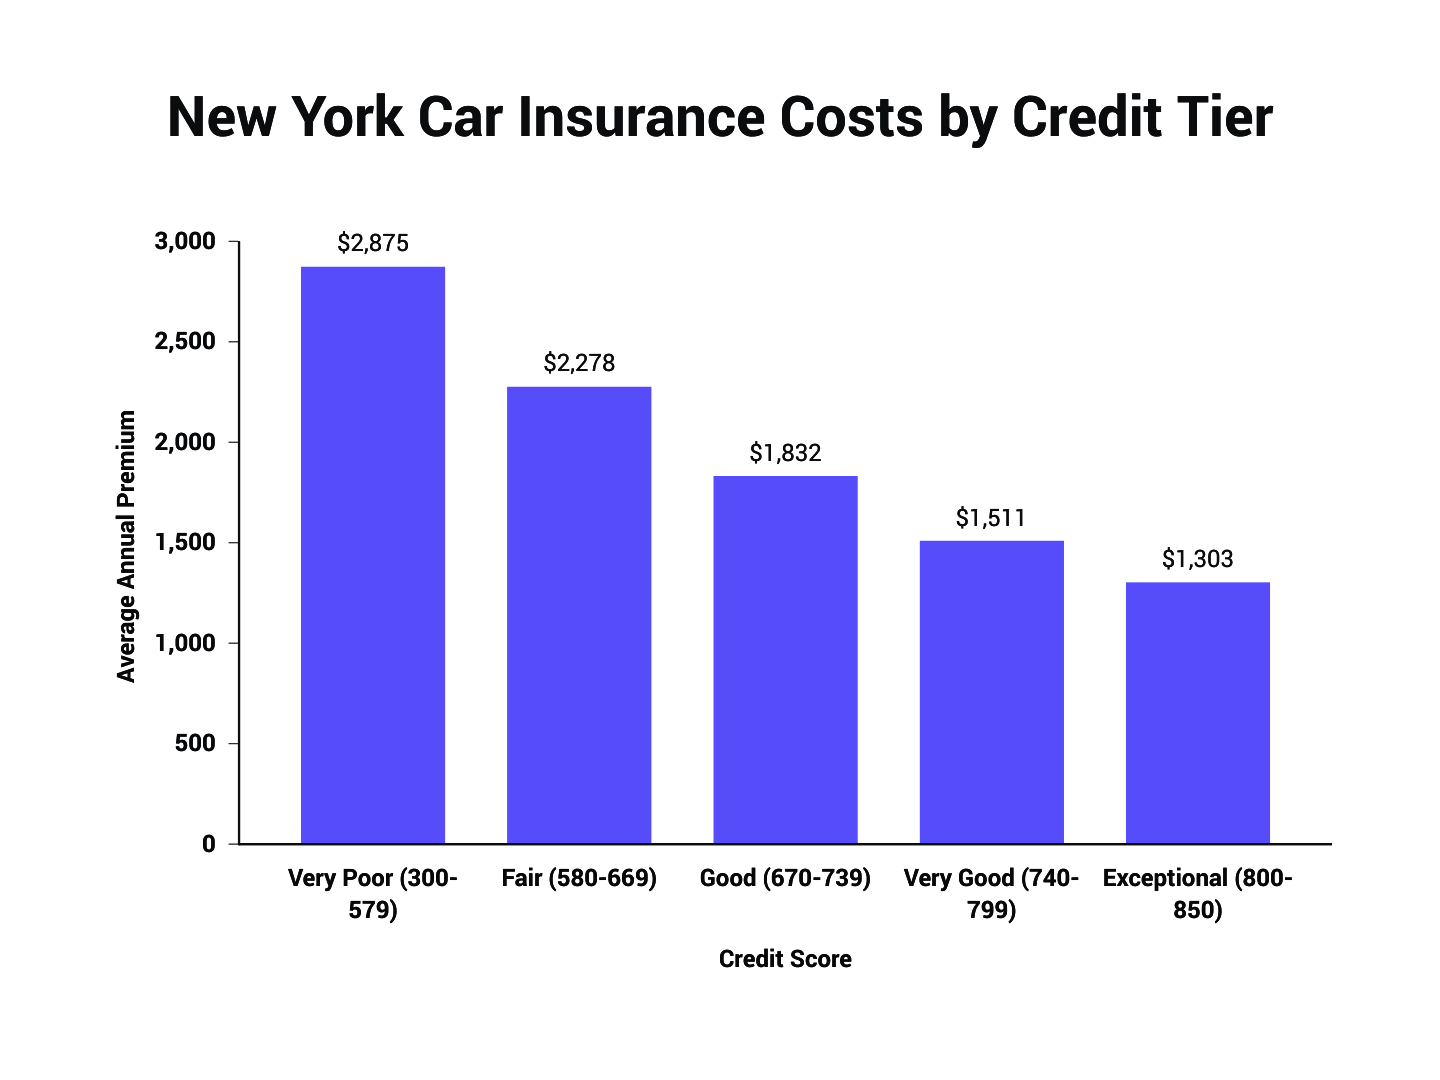 cheaper car insurance car insured cheaper auto insurance insurers